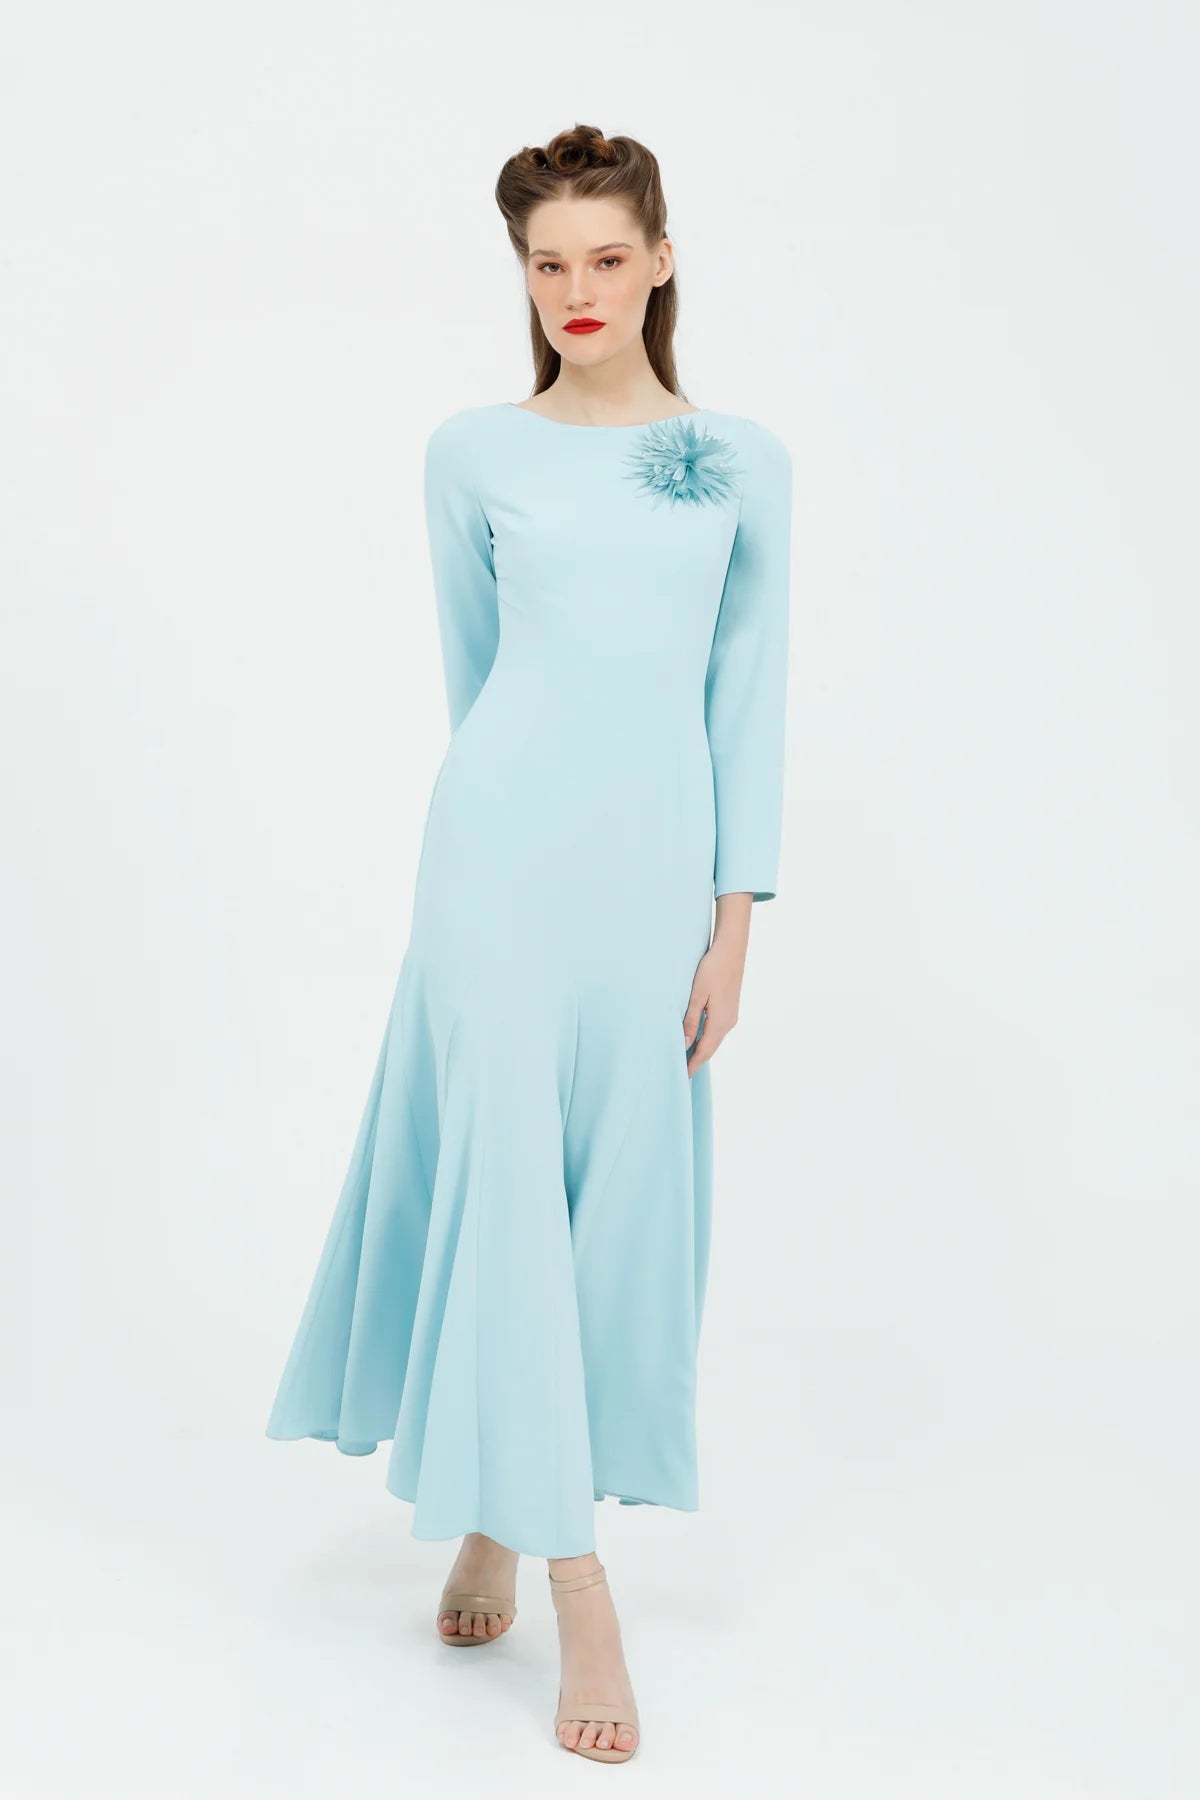 MZH024 DRESS فستان